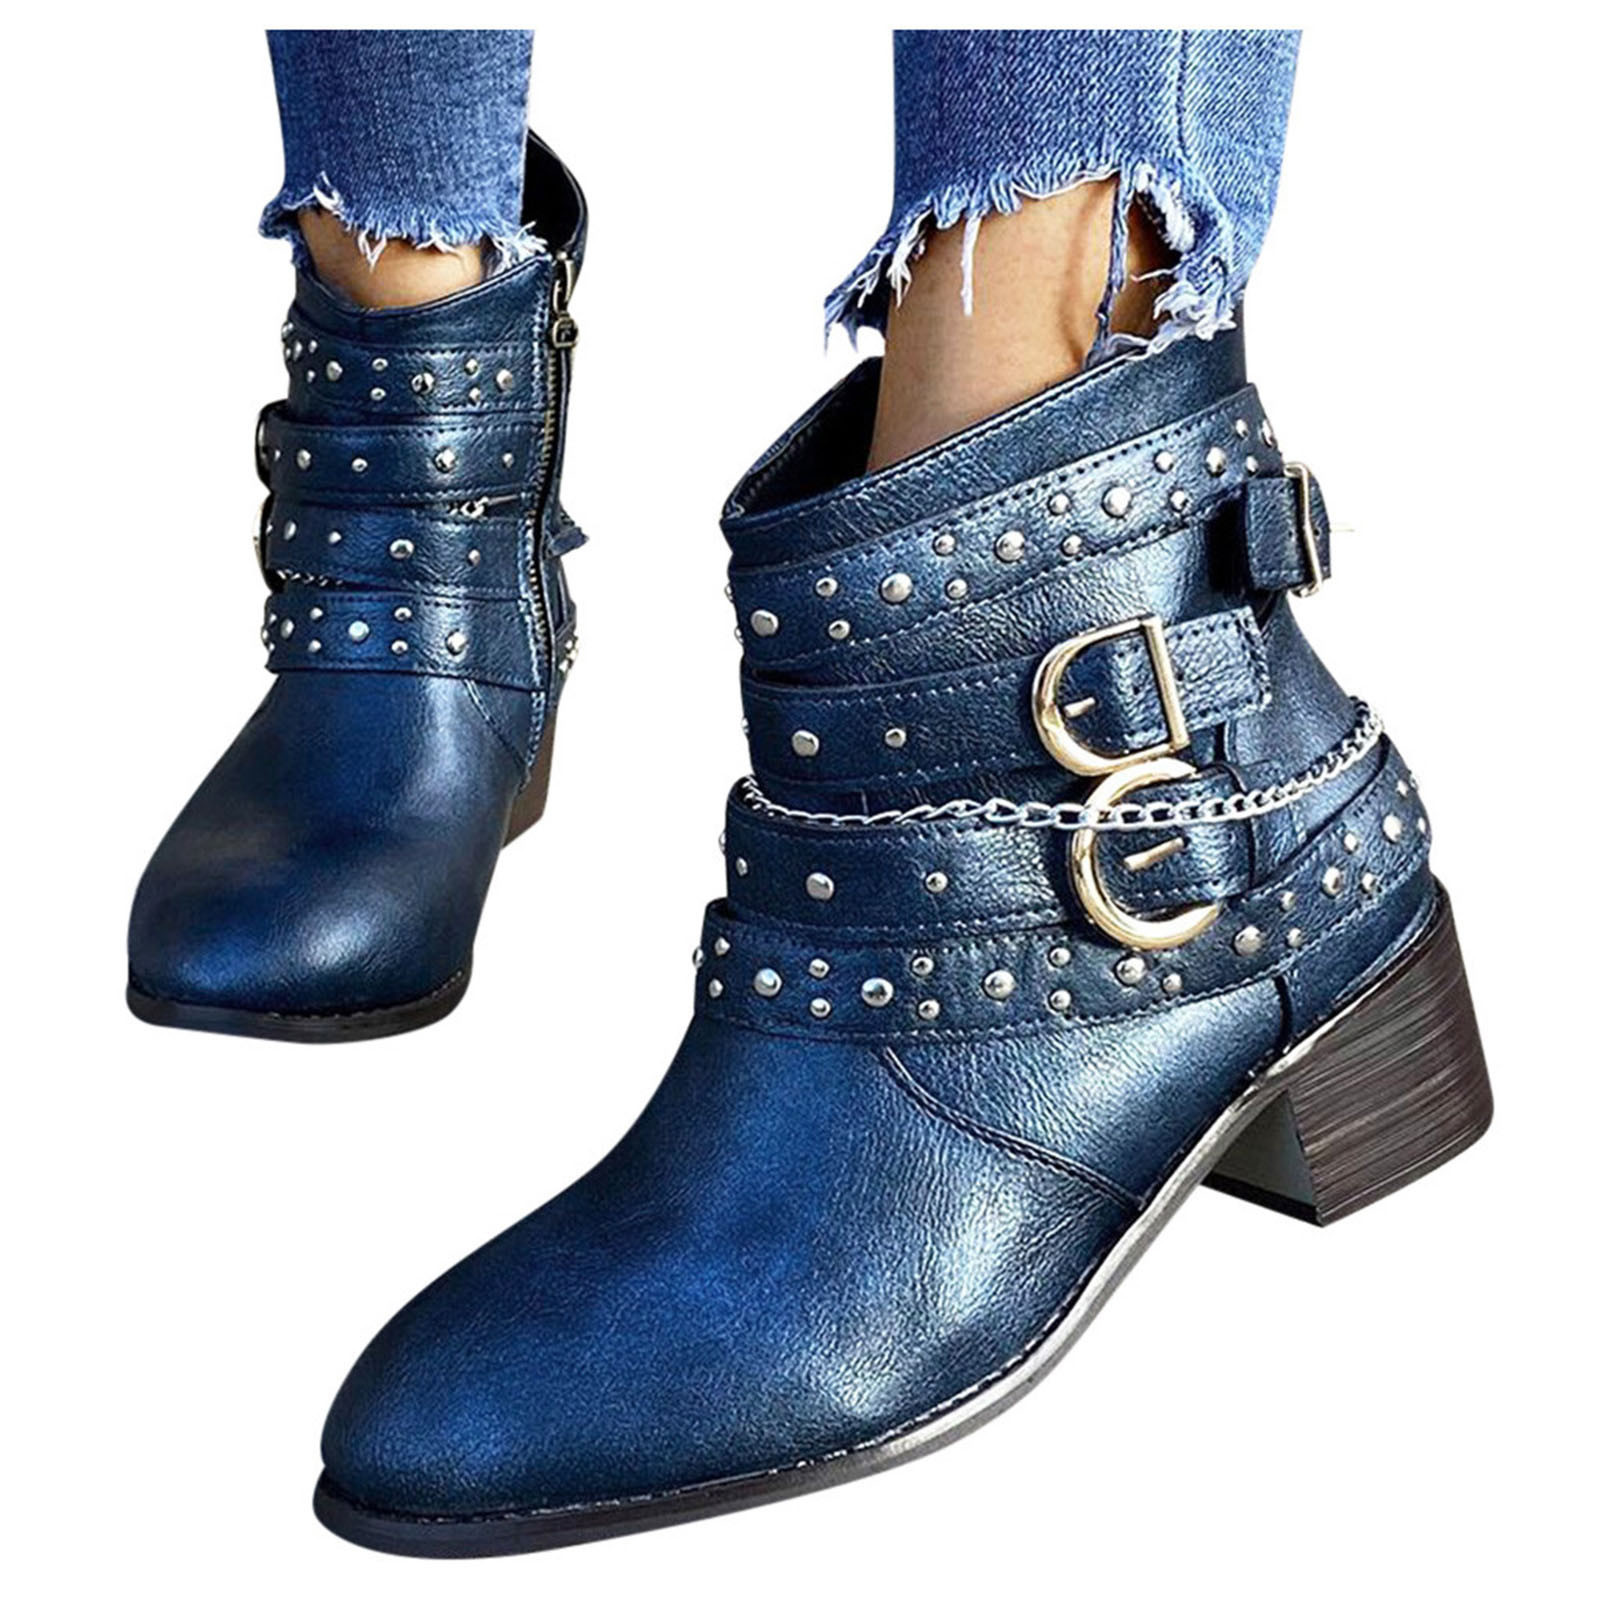 Tejiojio Retro Boots For Women, Vintage Women's Boots Girls Short ...